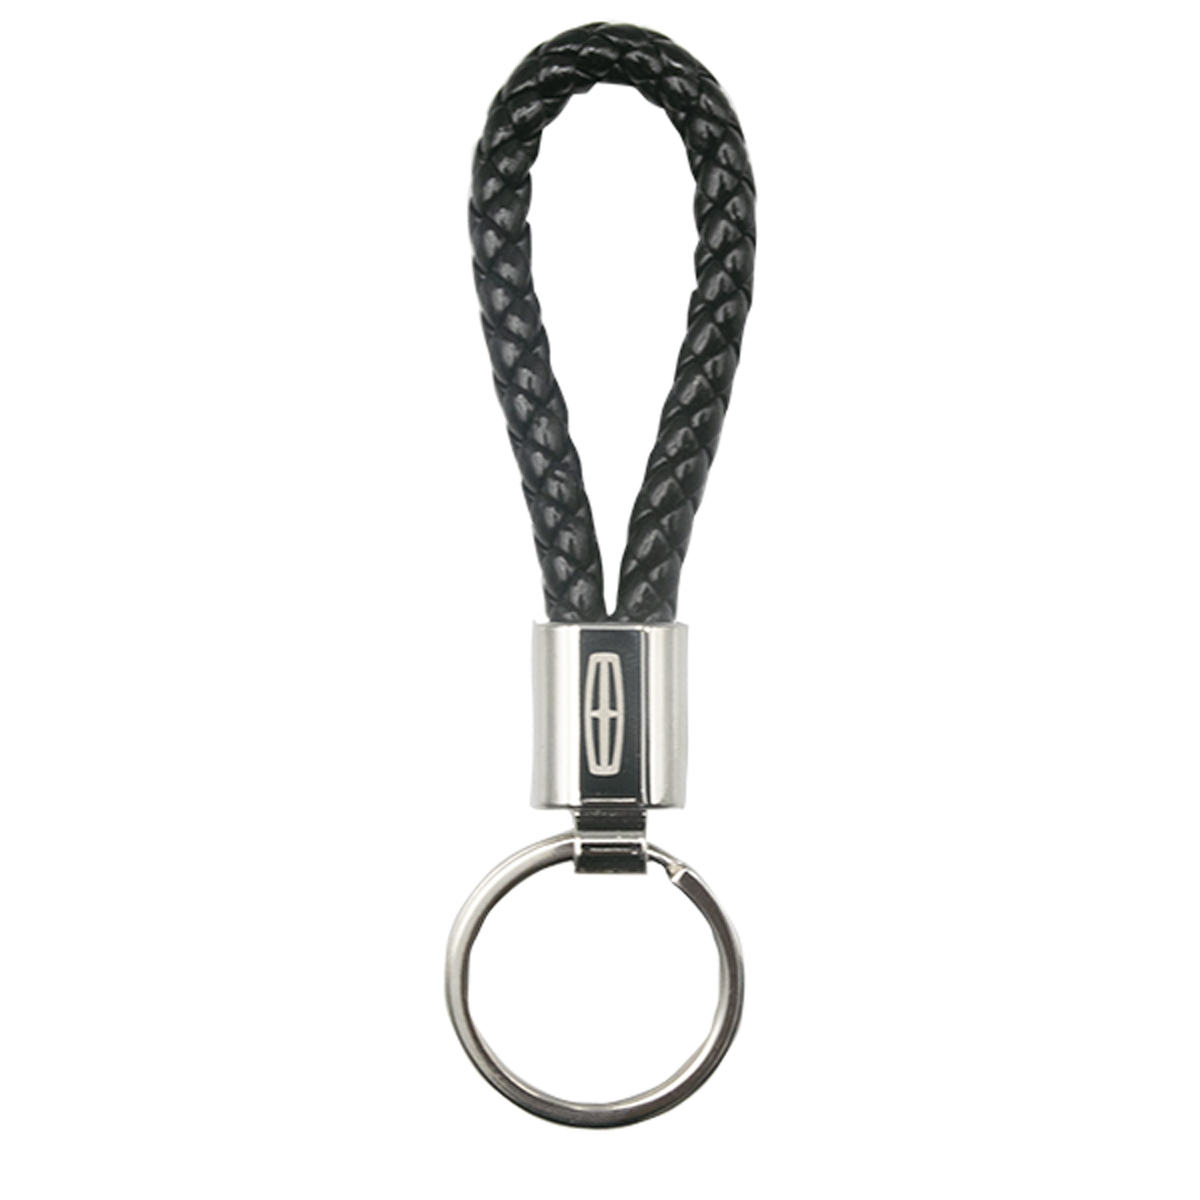 Buy Cheap LouisVuitton Car key chain leather metal key chain